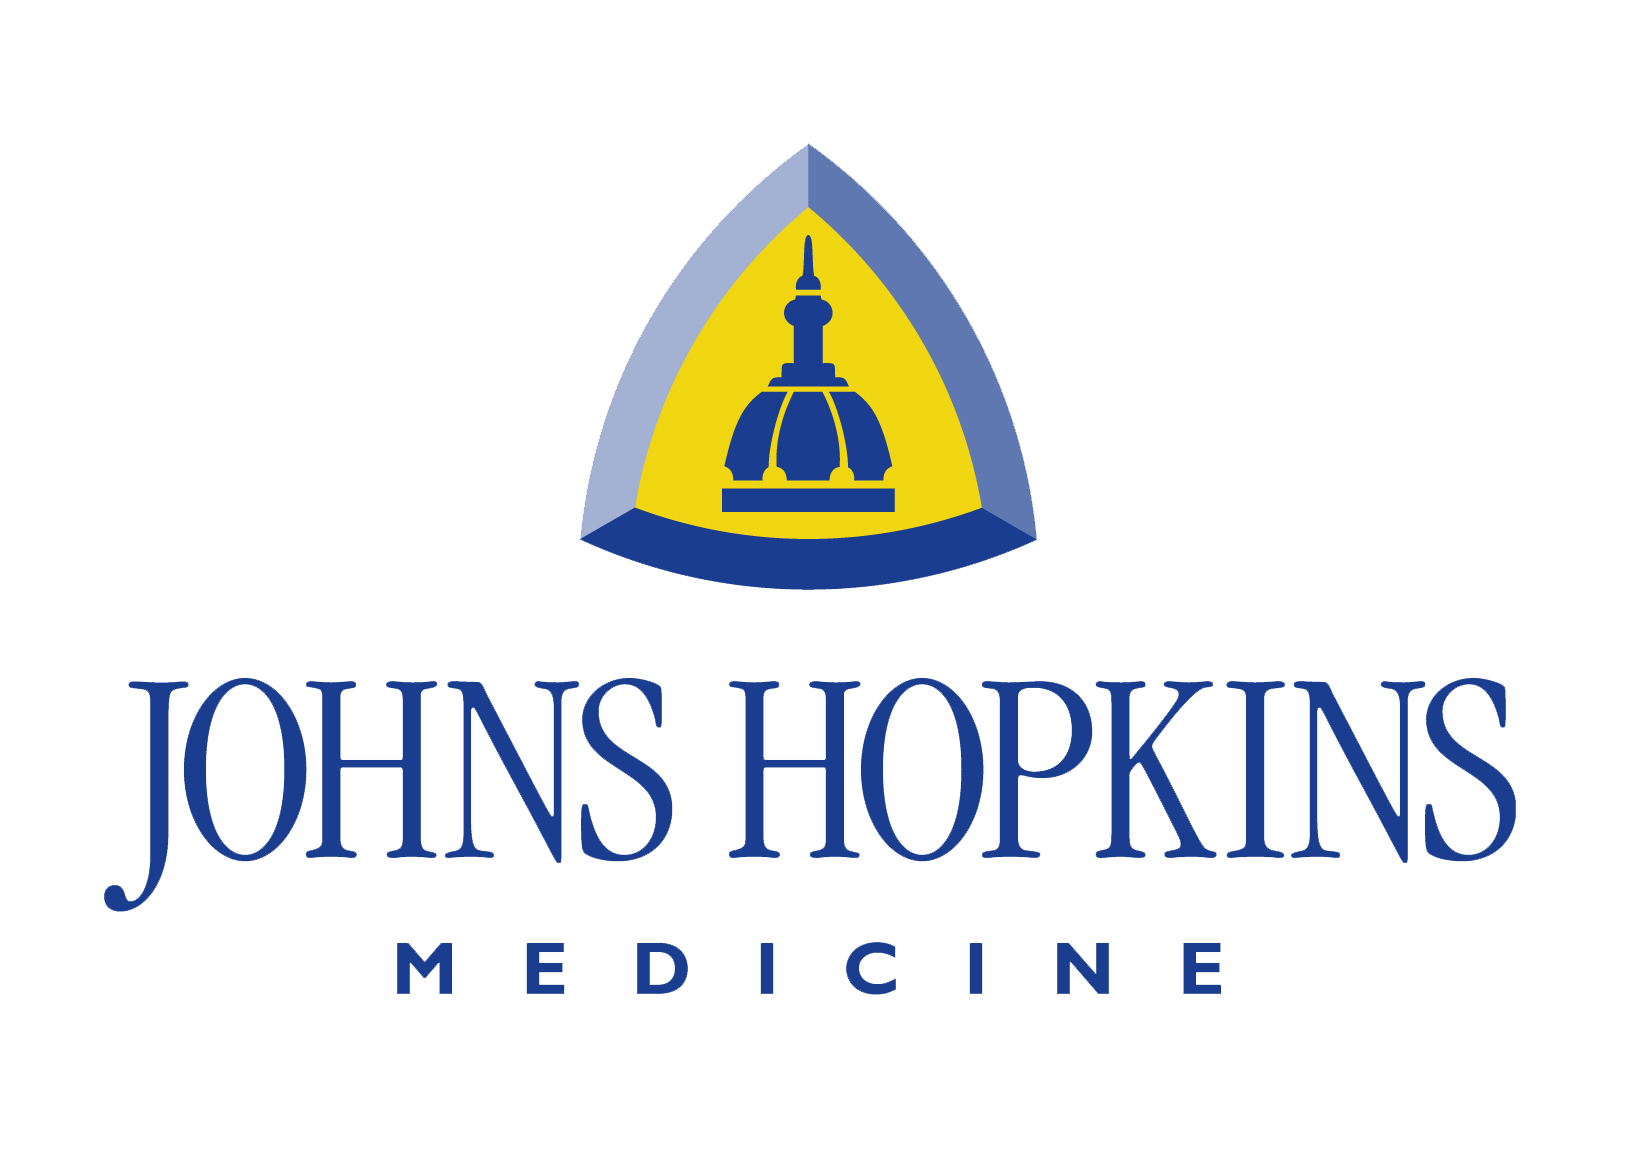 Johns Hopkins employs 葫芦影业 engineers